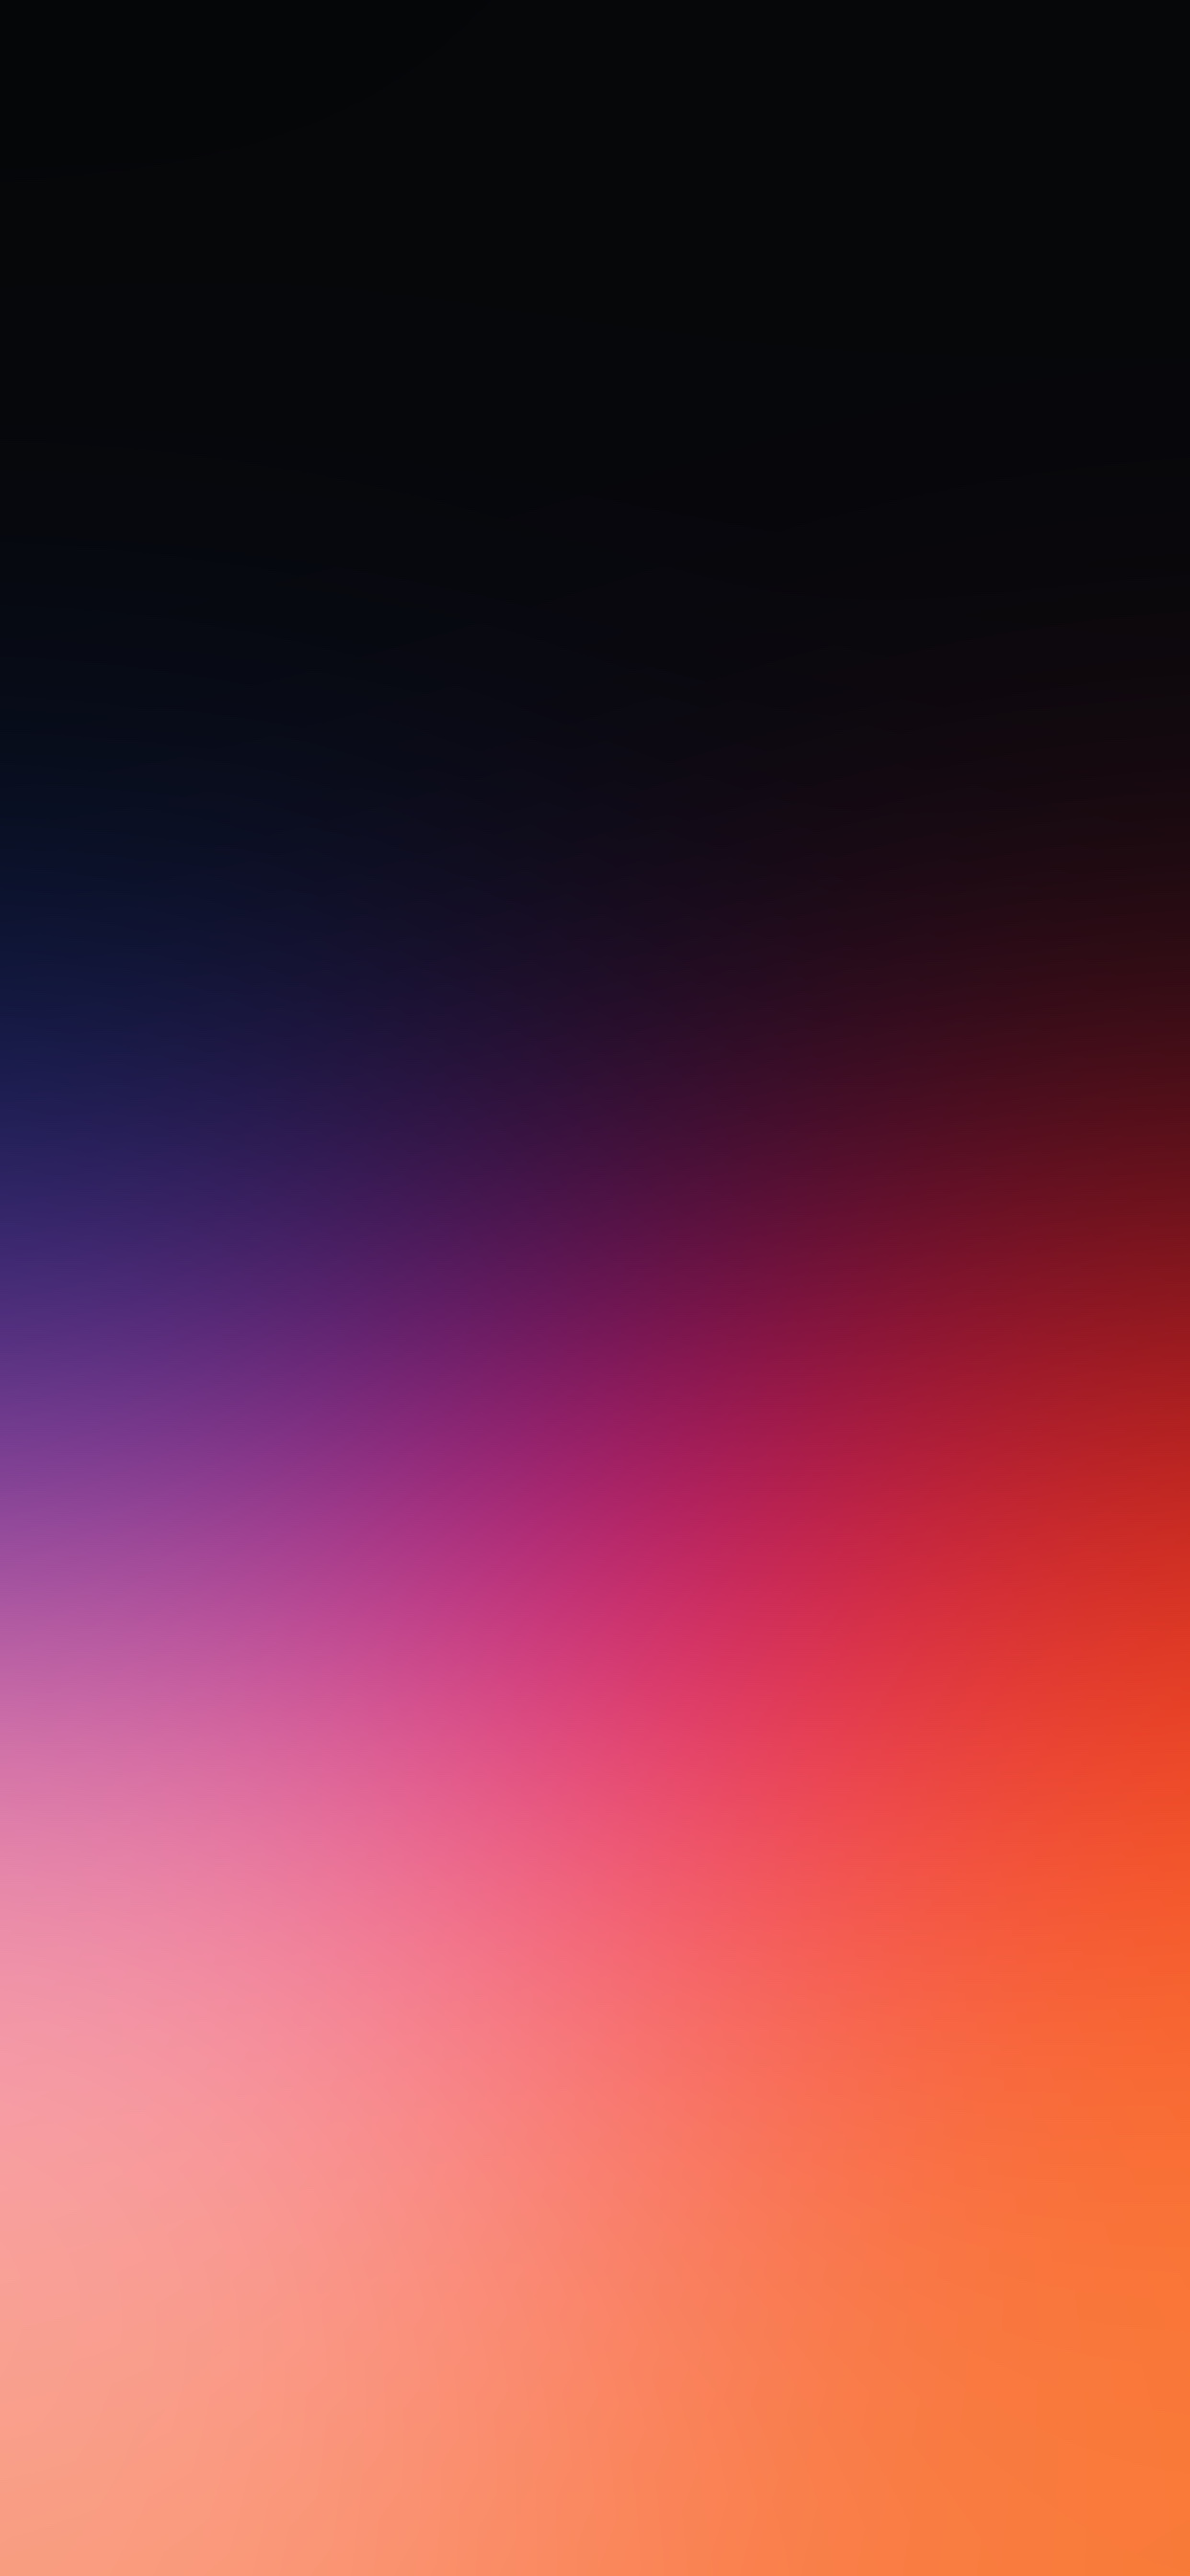 farbverlauf iphone wallpaper,himmel,violett,blau,lila,rot